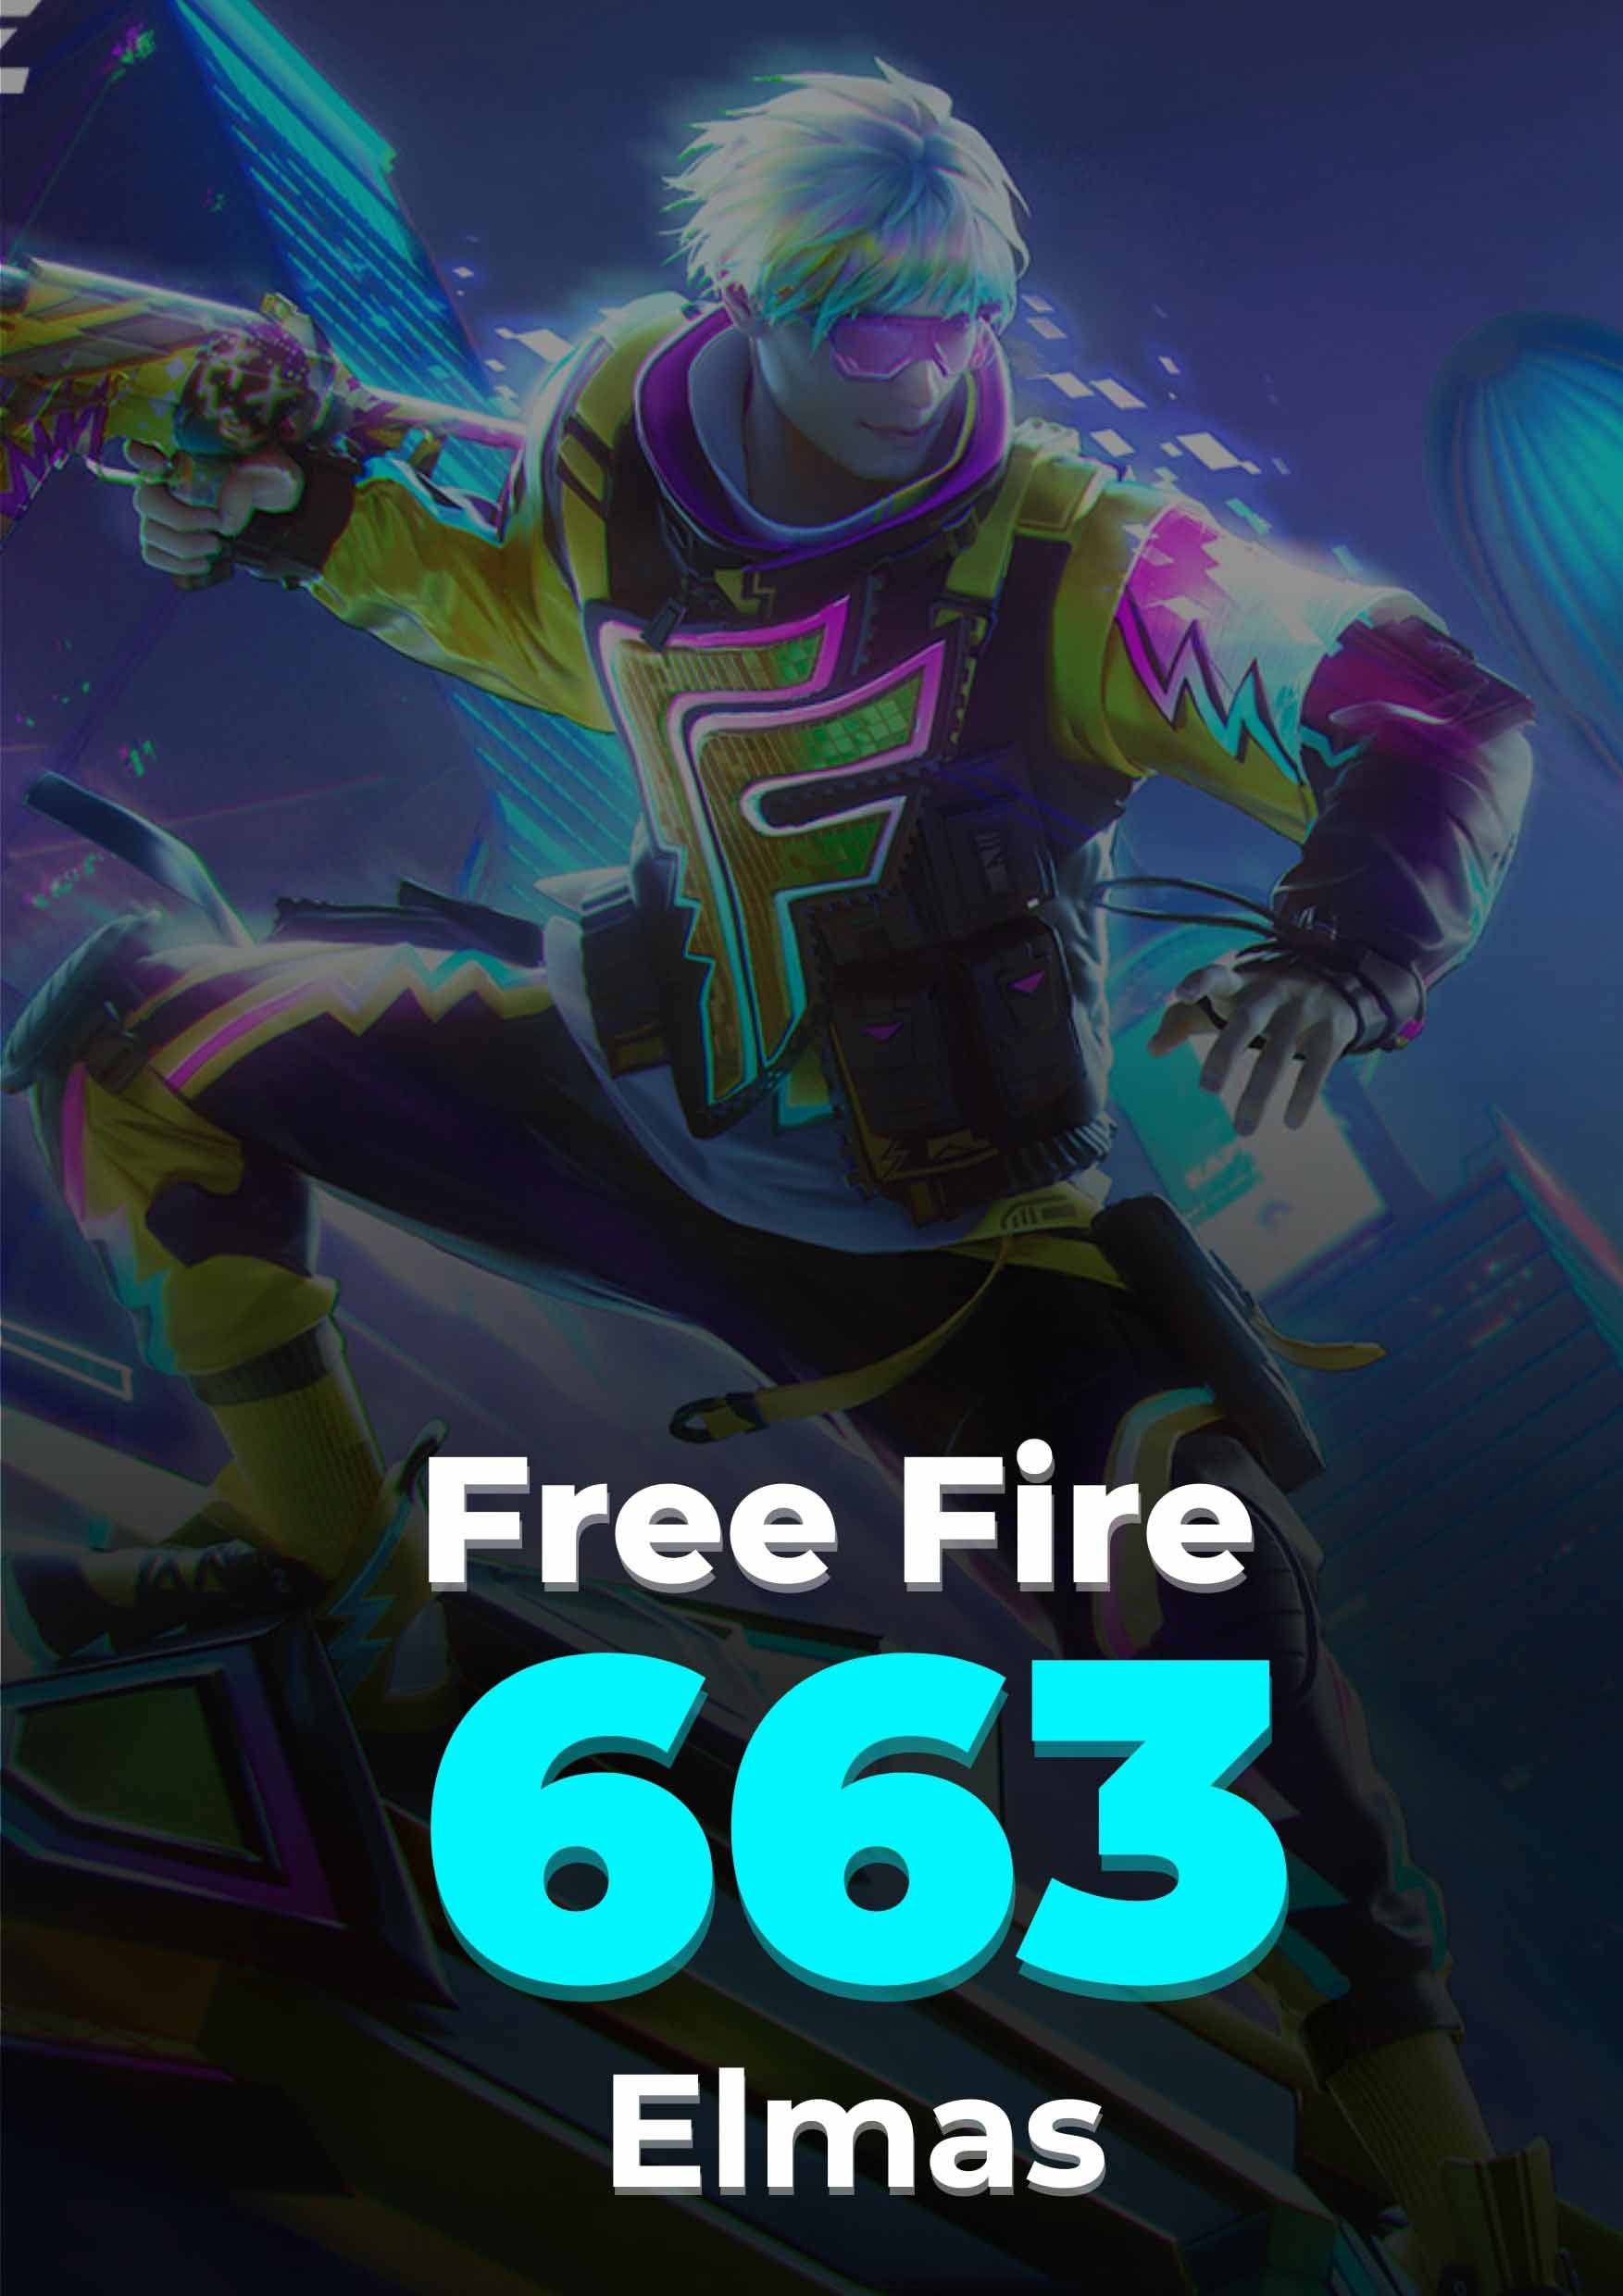 Free Fire 530 + 133 Elmas